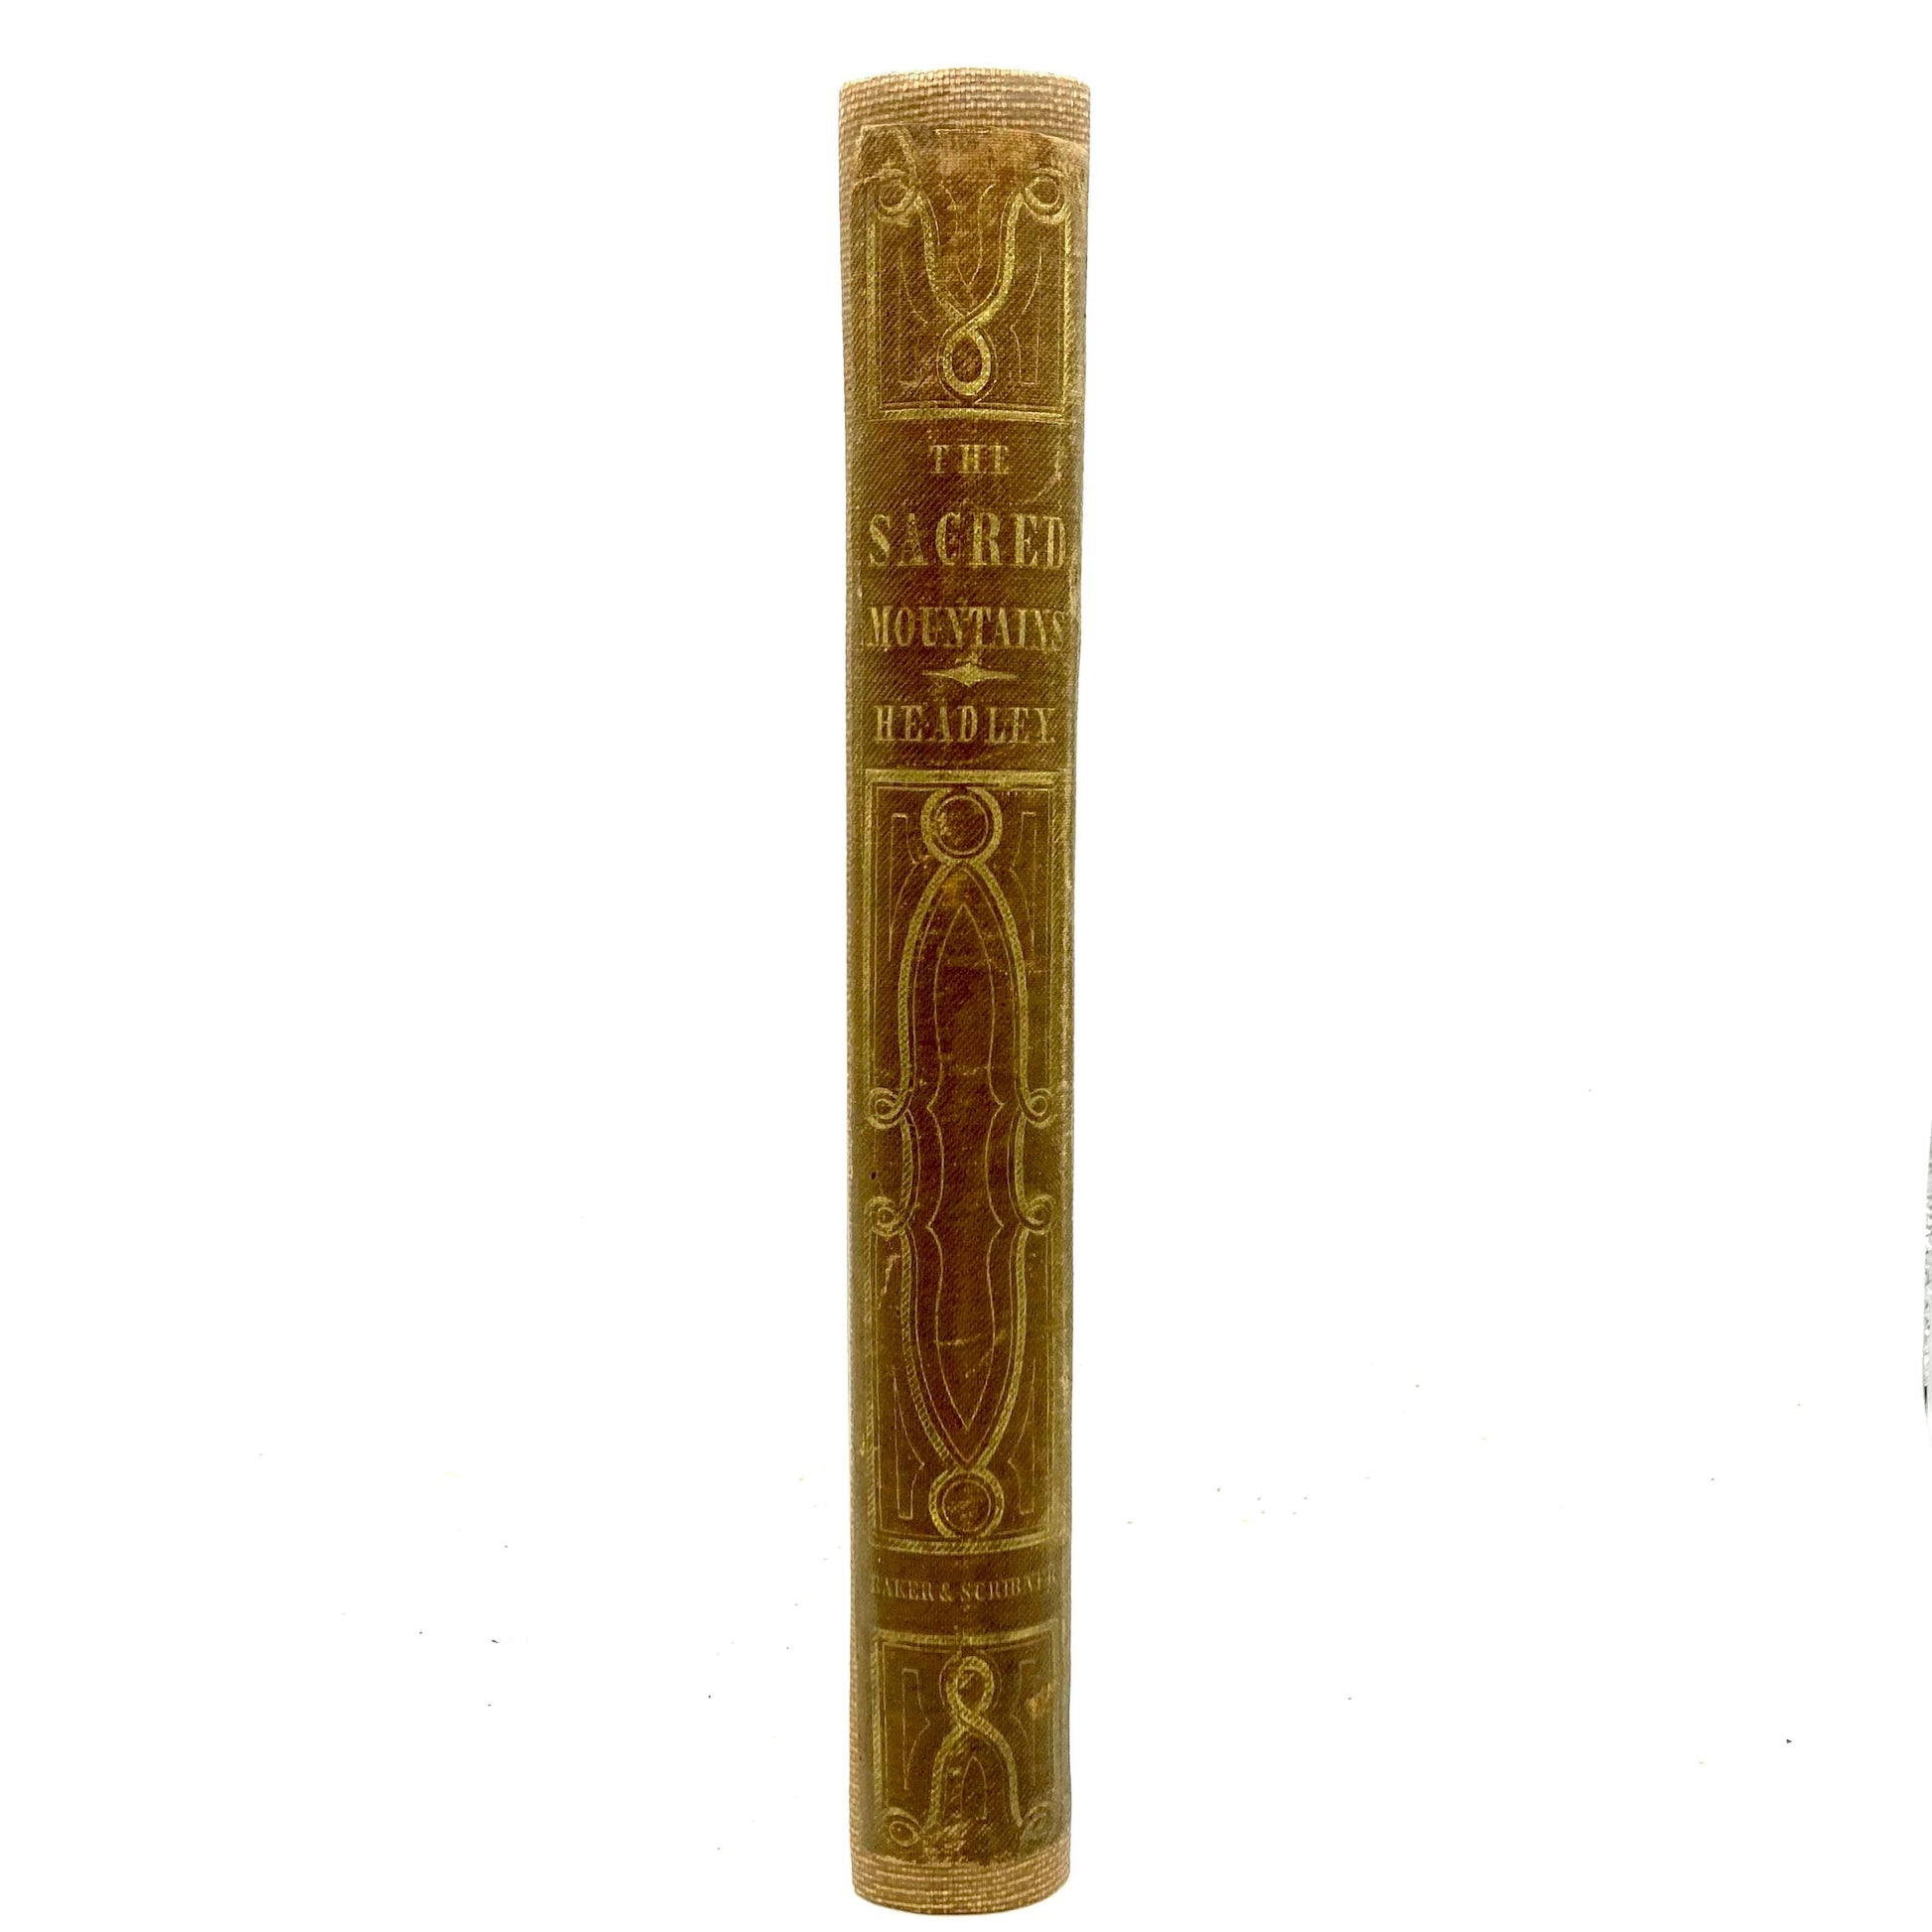 HEADLEY, J.T. "The Sacred Mountains" [Baker & Scribner, 1847] - Buzz Bookstore